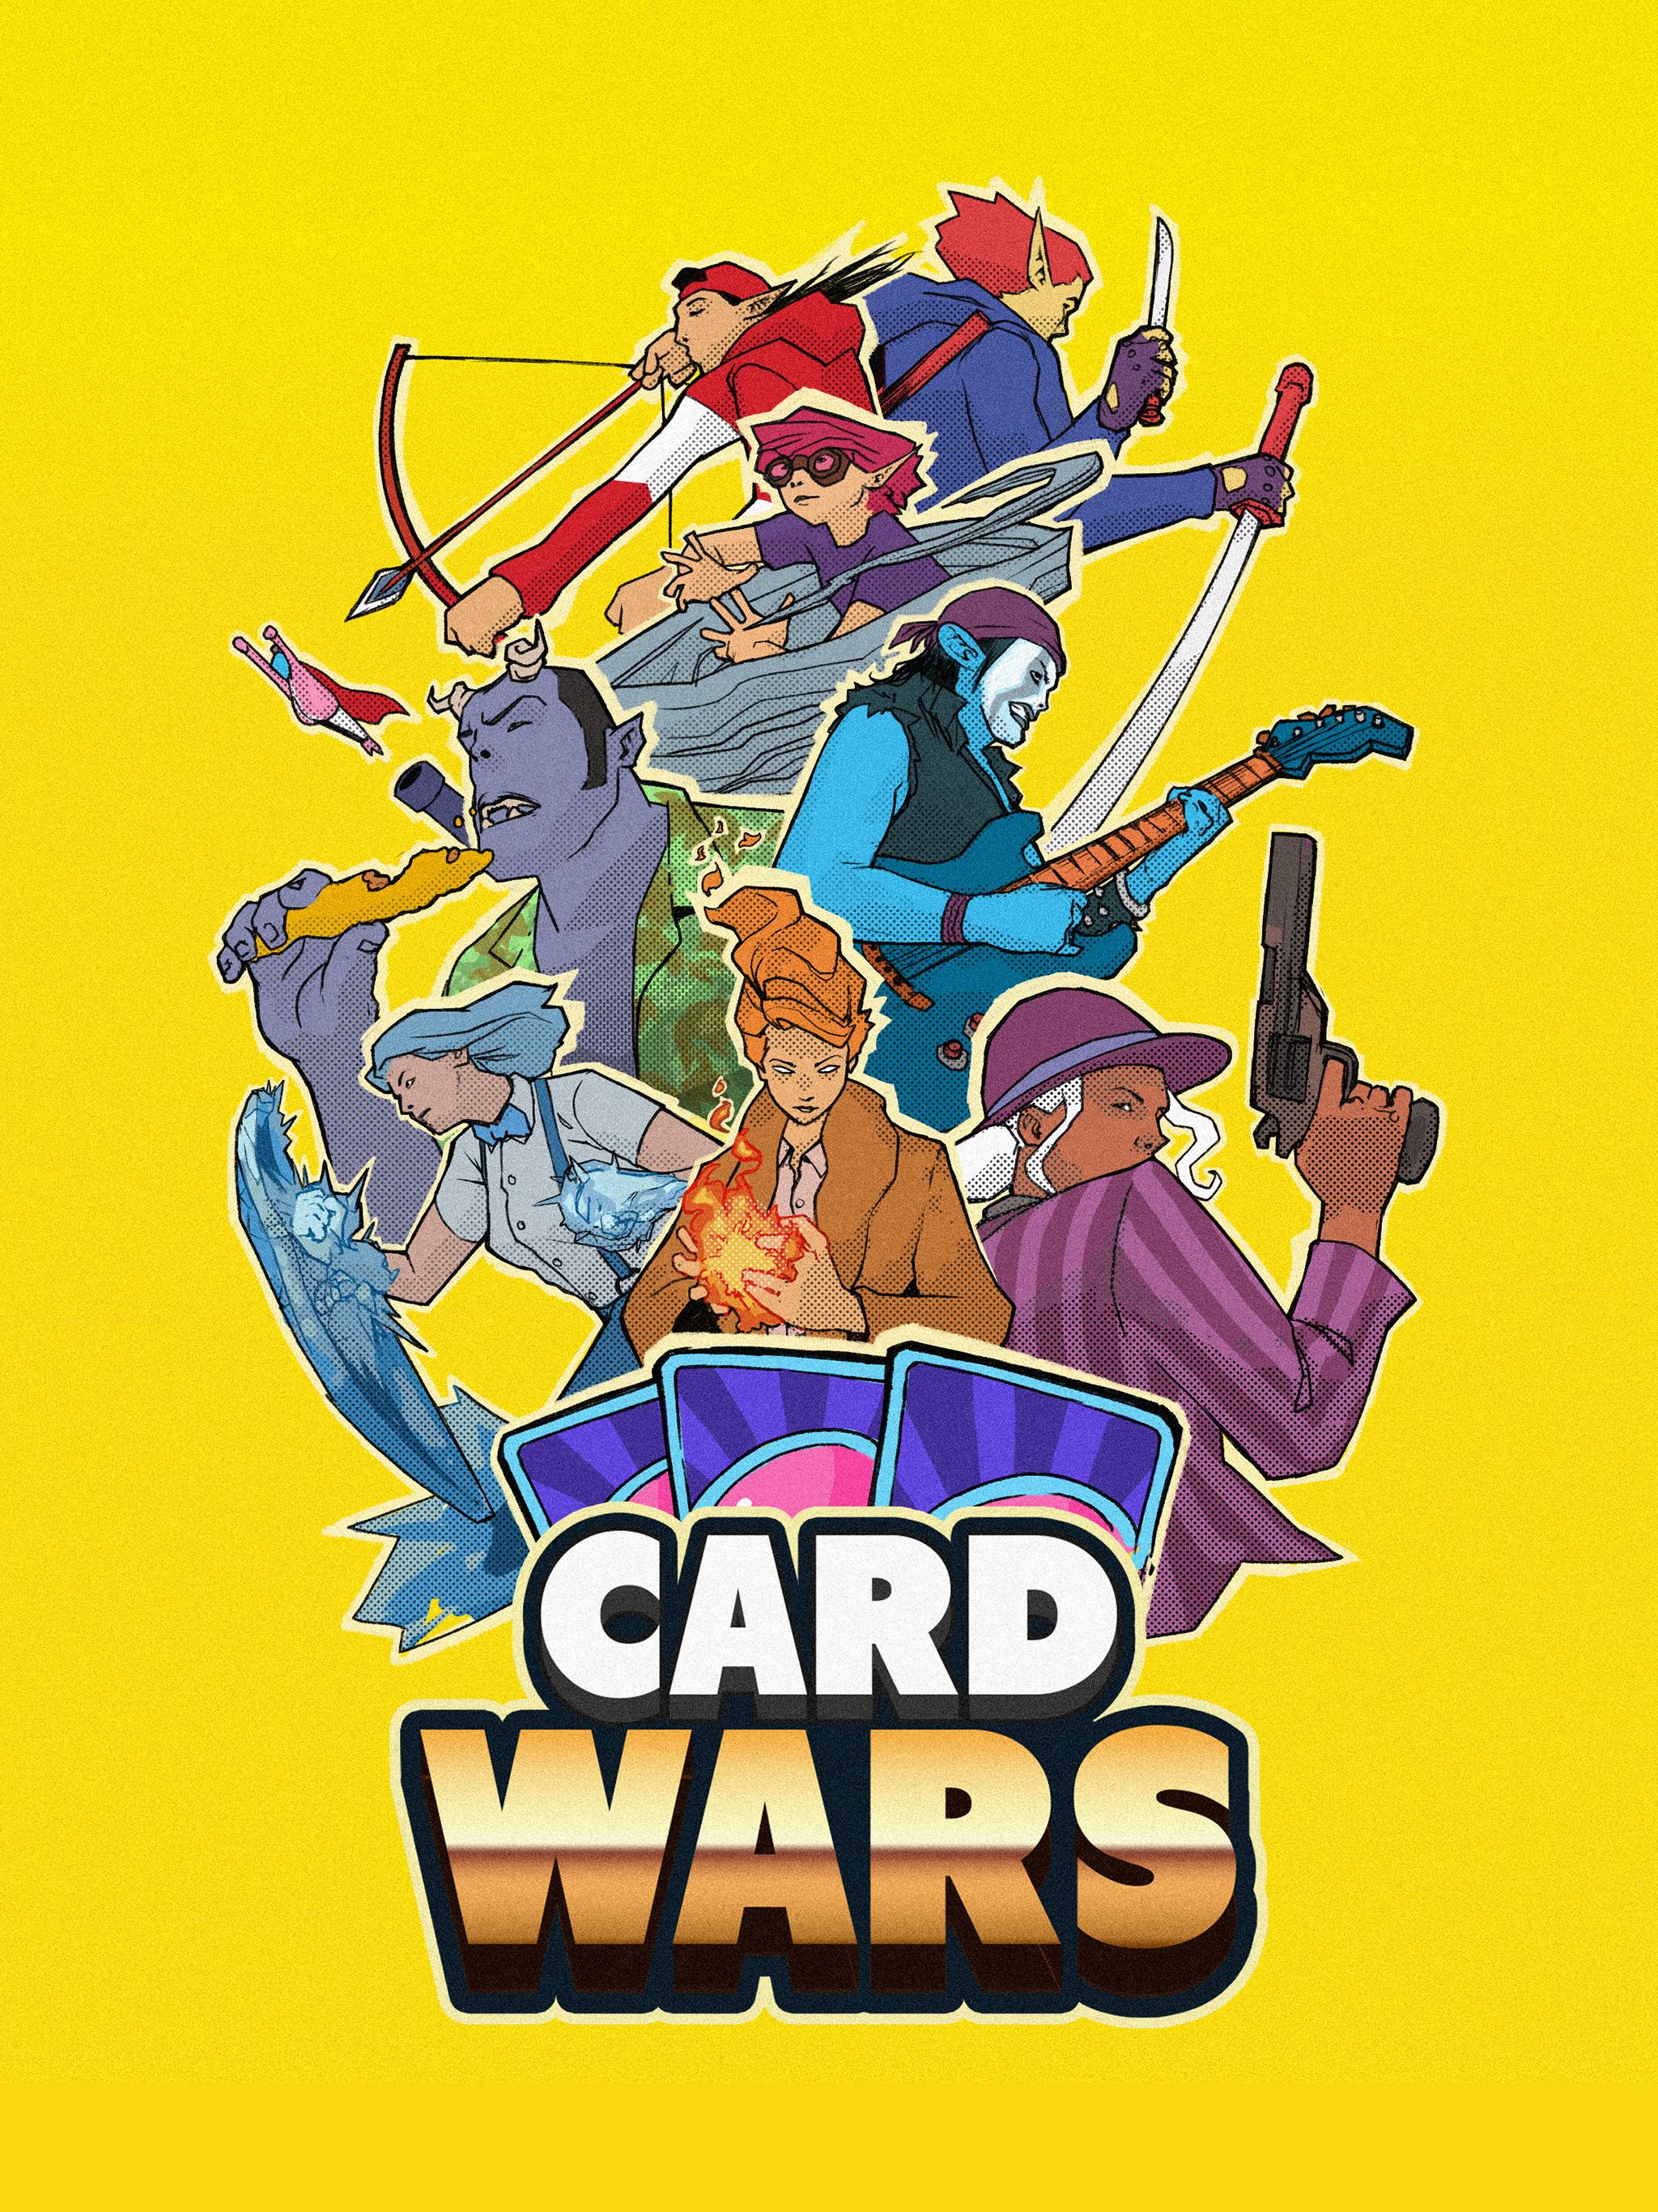 Card Wars Battle Royale CCG Lockdown brawl 3.1.0 Screenshot 18